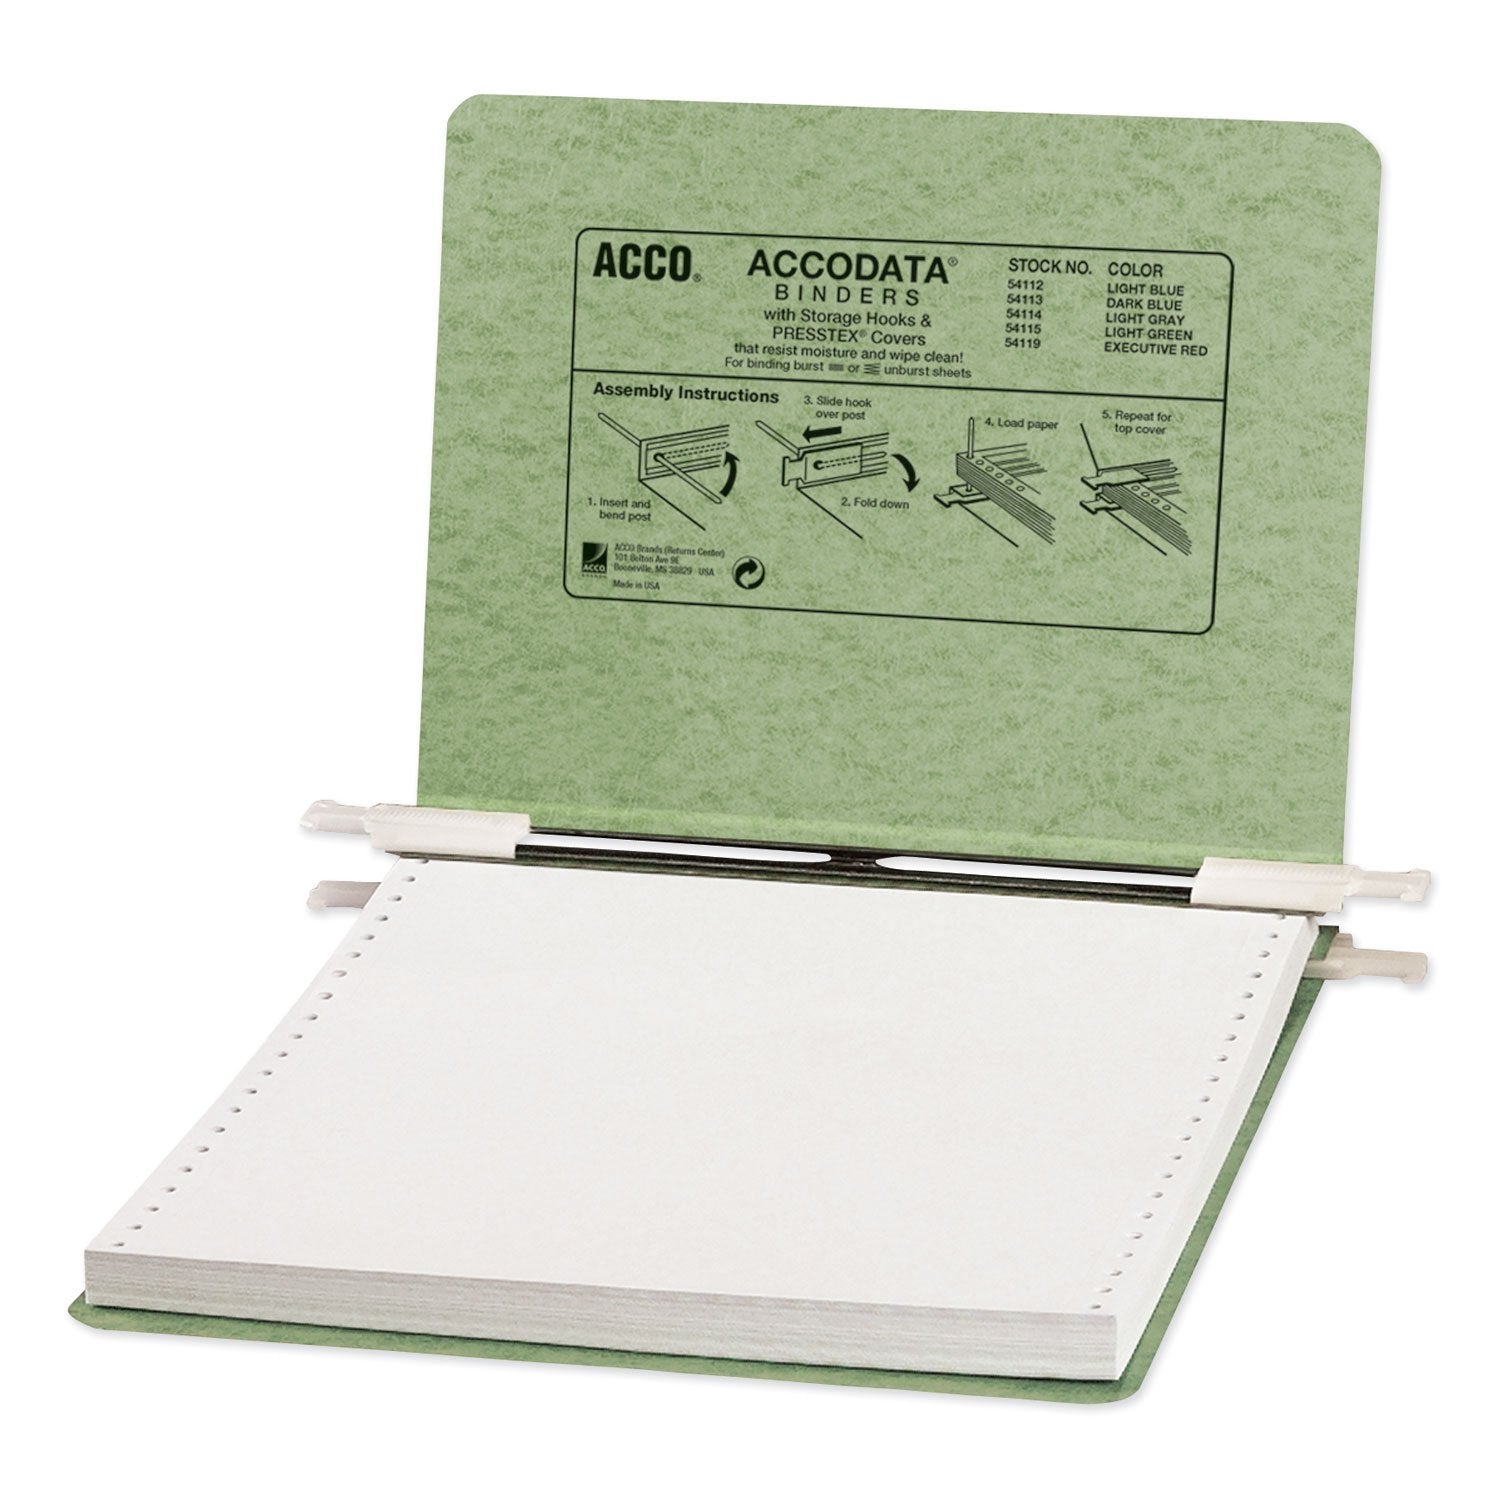 ACCO PRESSTEX Covers with Storage Hooks, 2 Posts, 6" Capacity, 9.5 x 11, Light Green